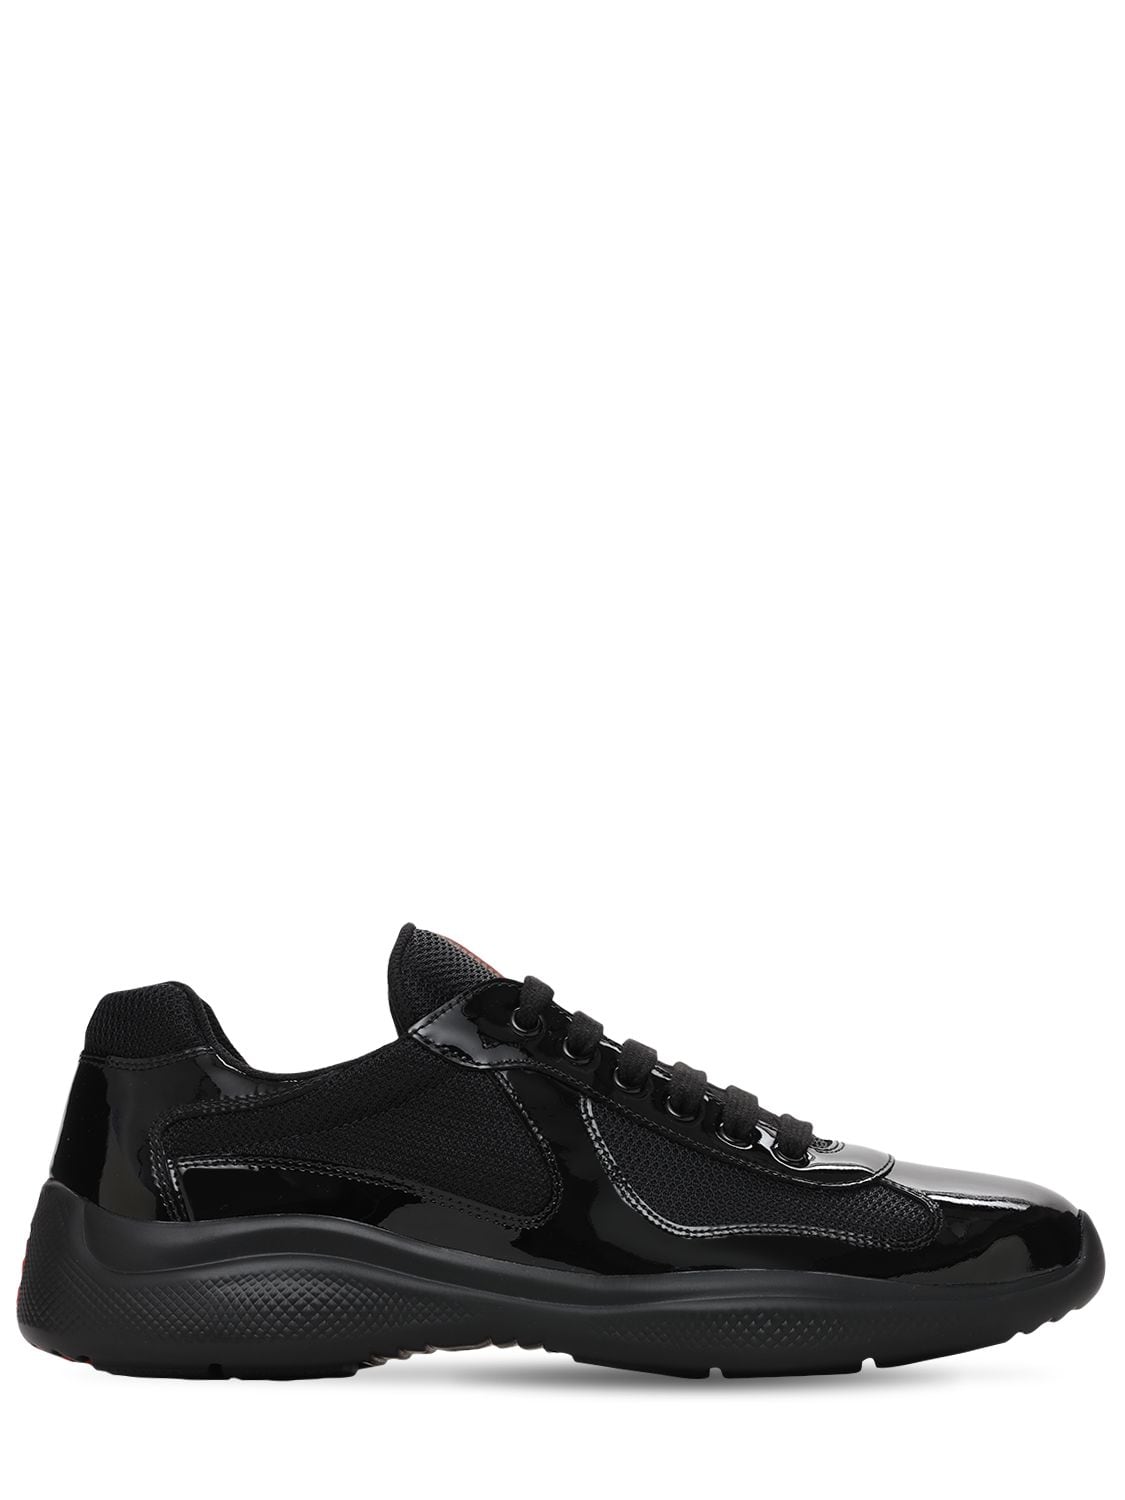 Prada America's Cup Leather & Mesh Sneakers In Black